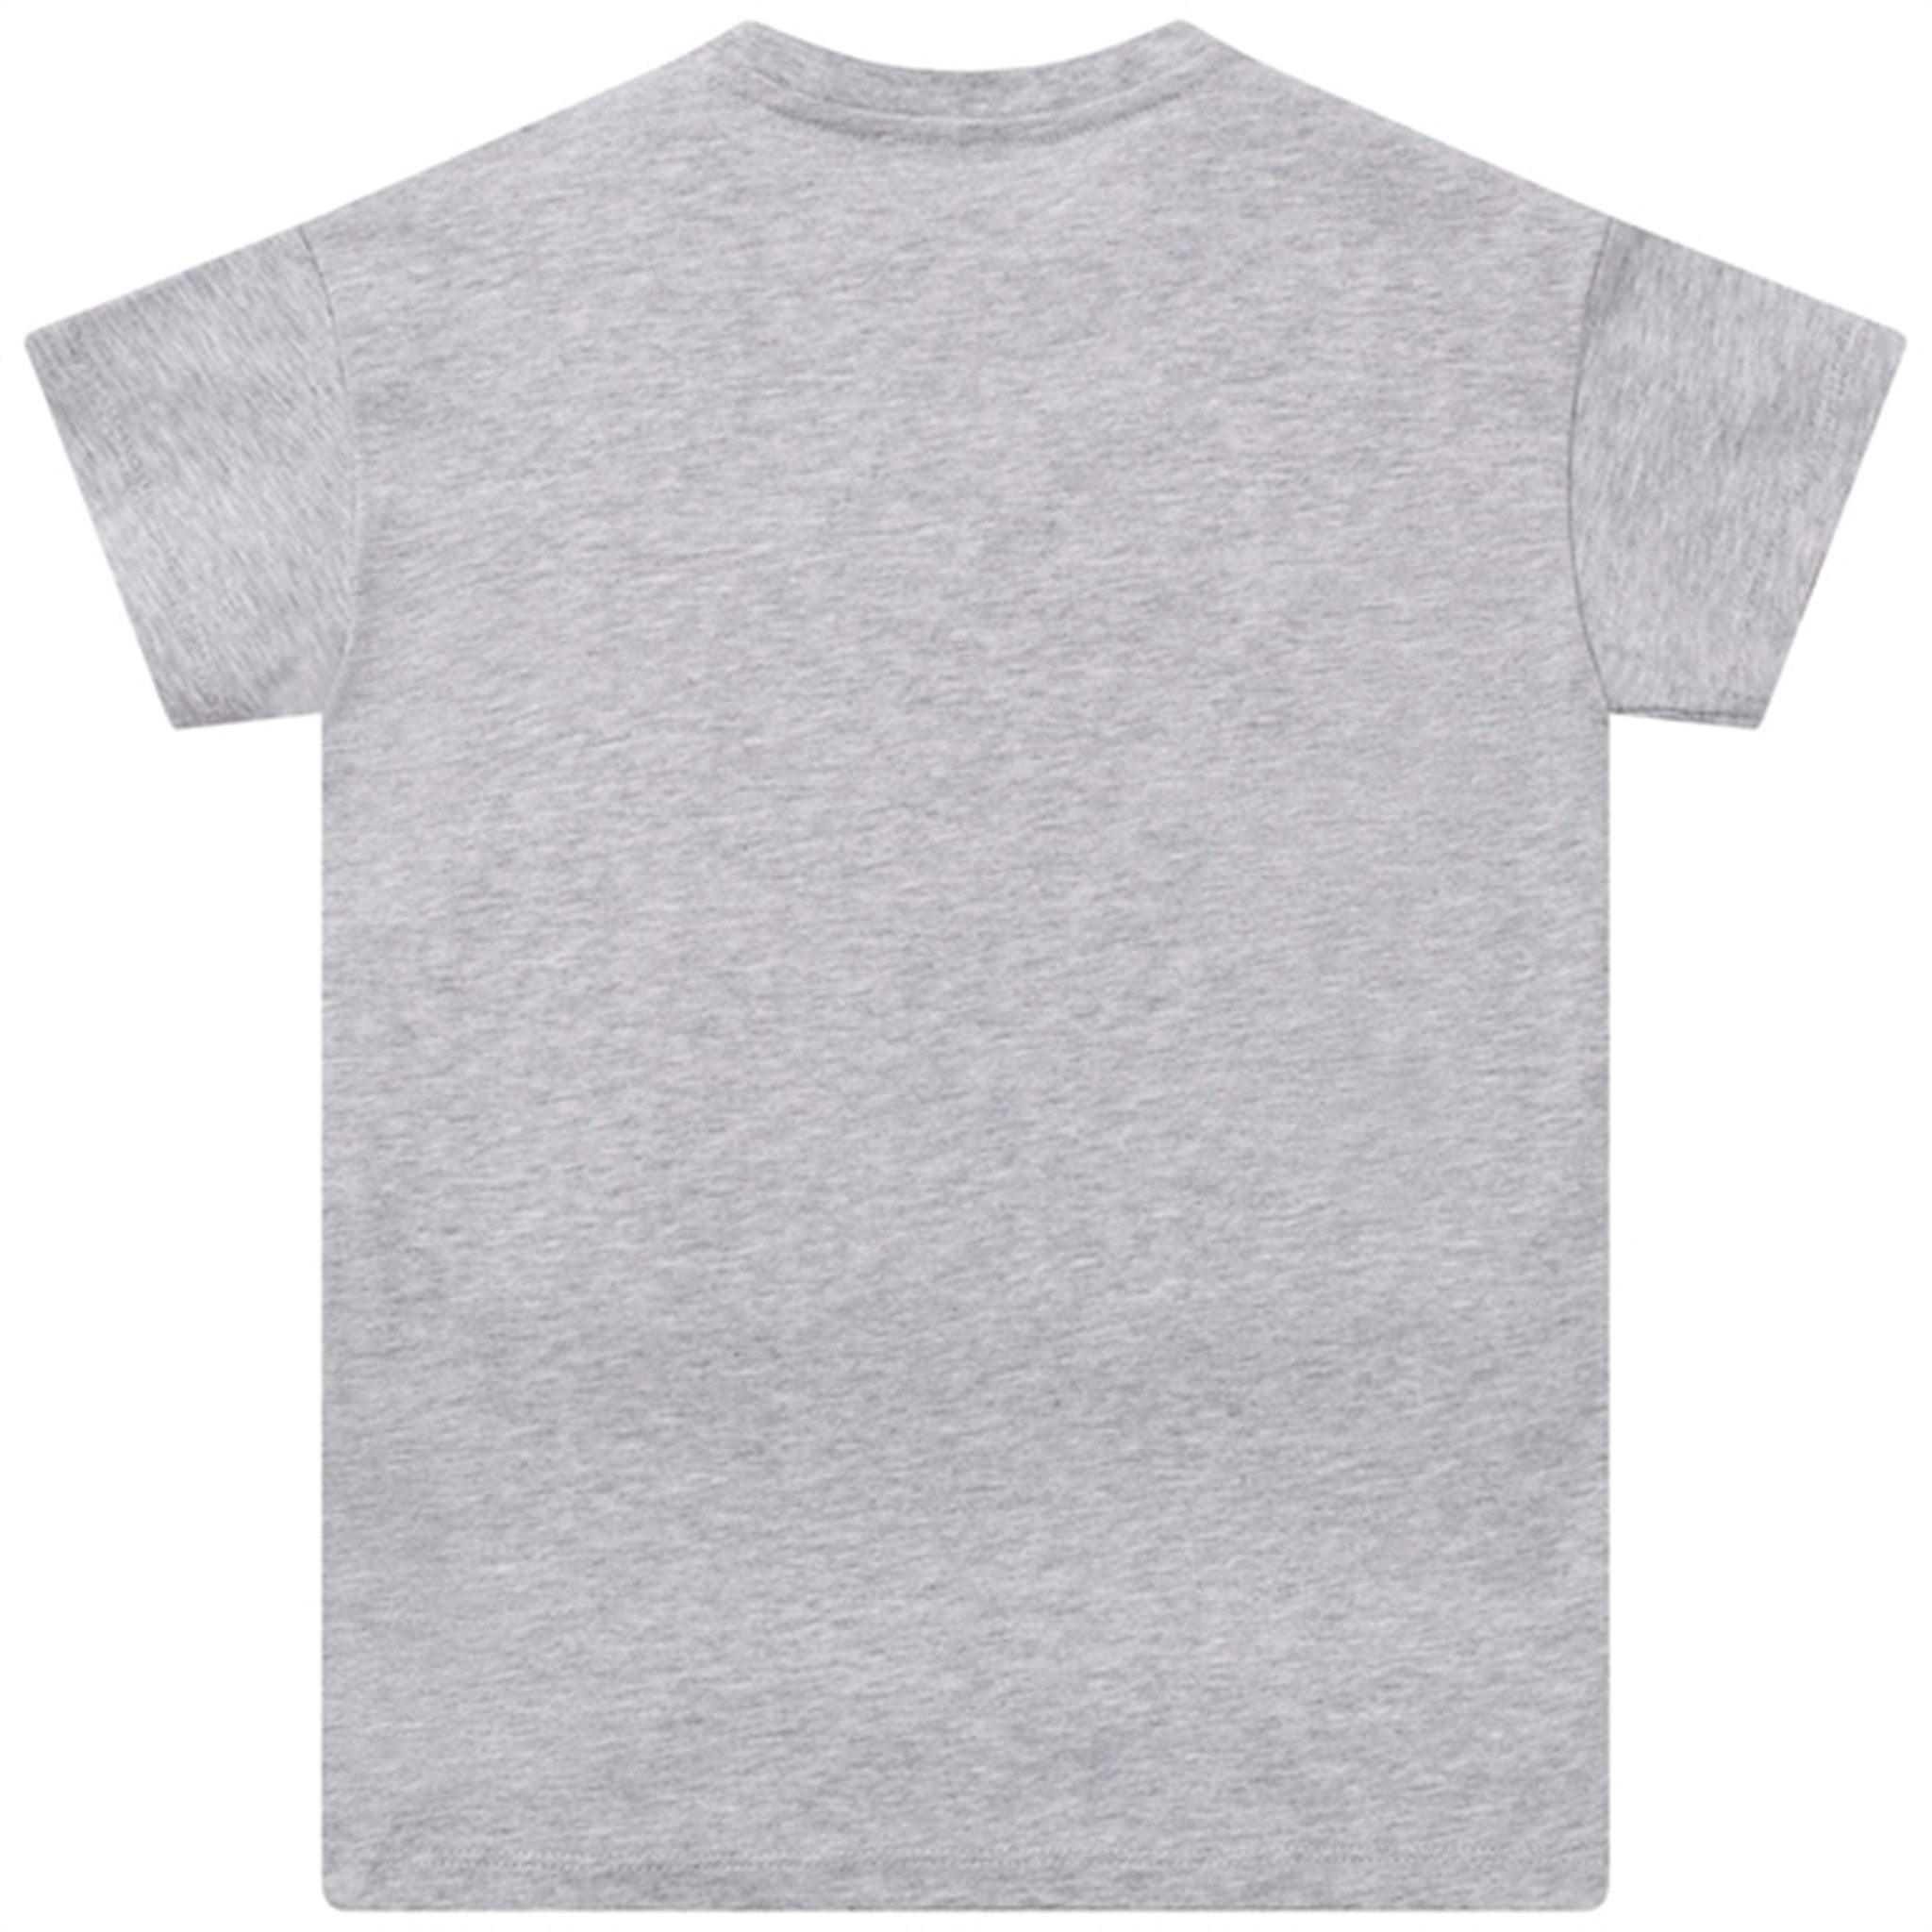 Kenzo T-shirt Grey Marl 2